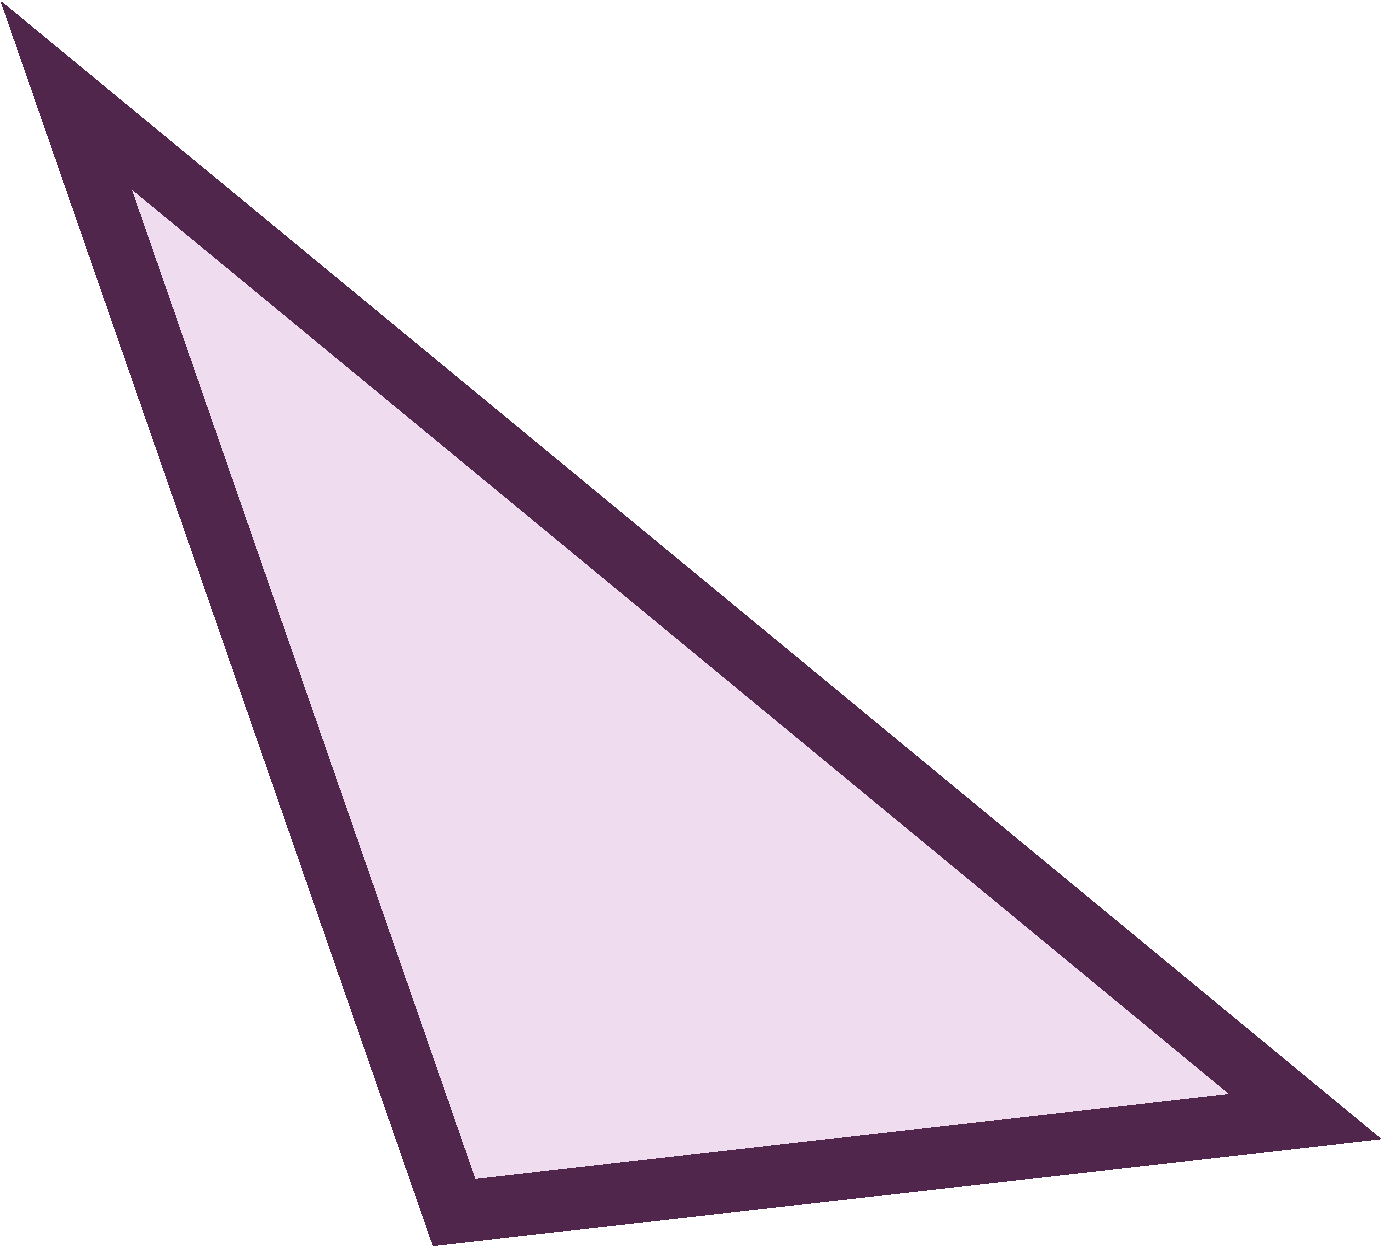 Triangular scalene